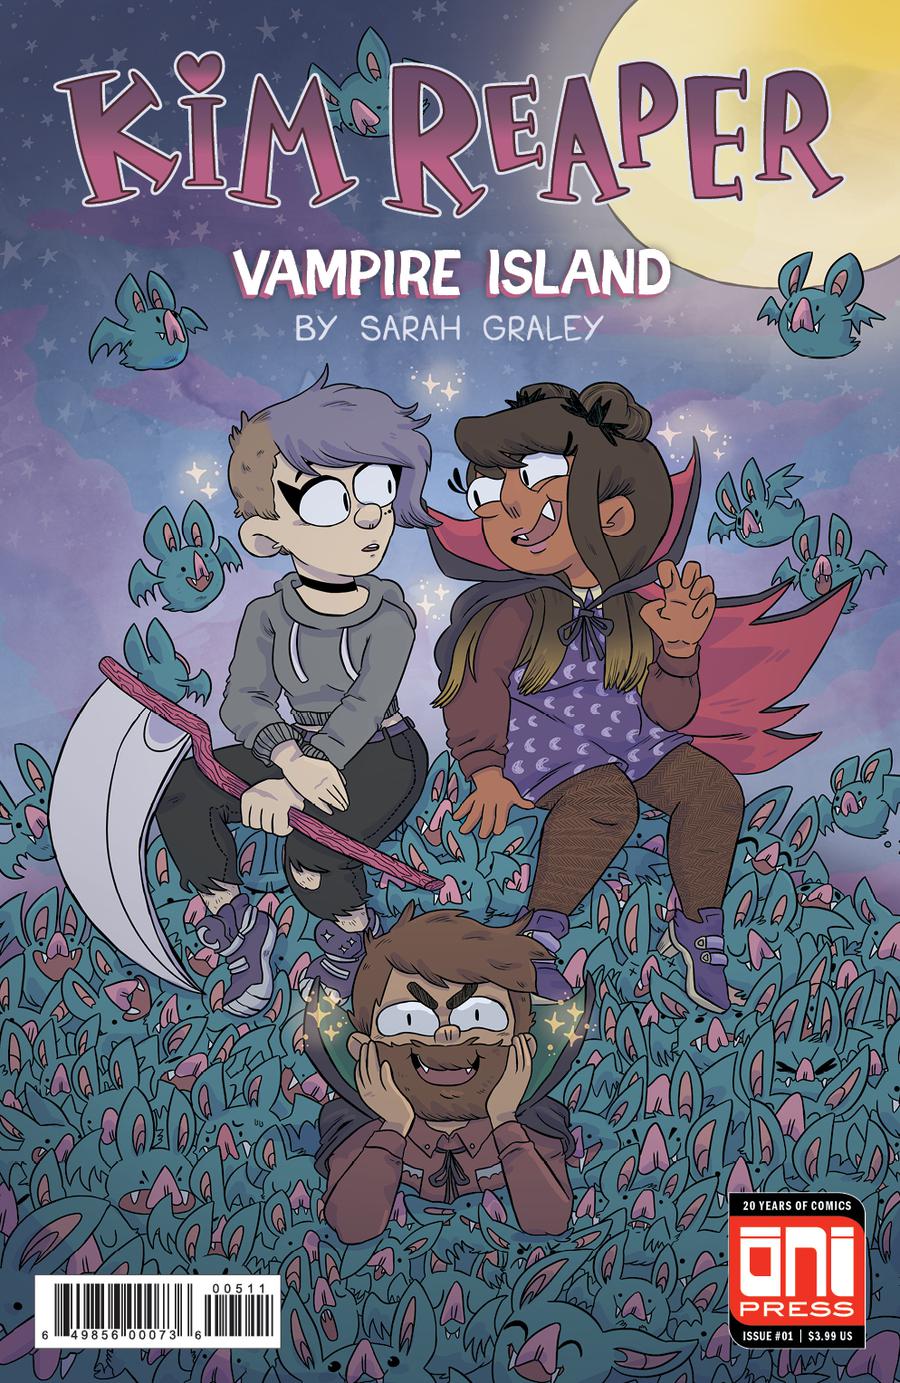 Kim Reaper Vampire Island #1 Cover A Regular Sarah Graley Cover